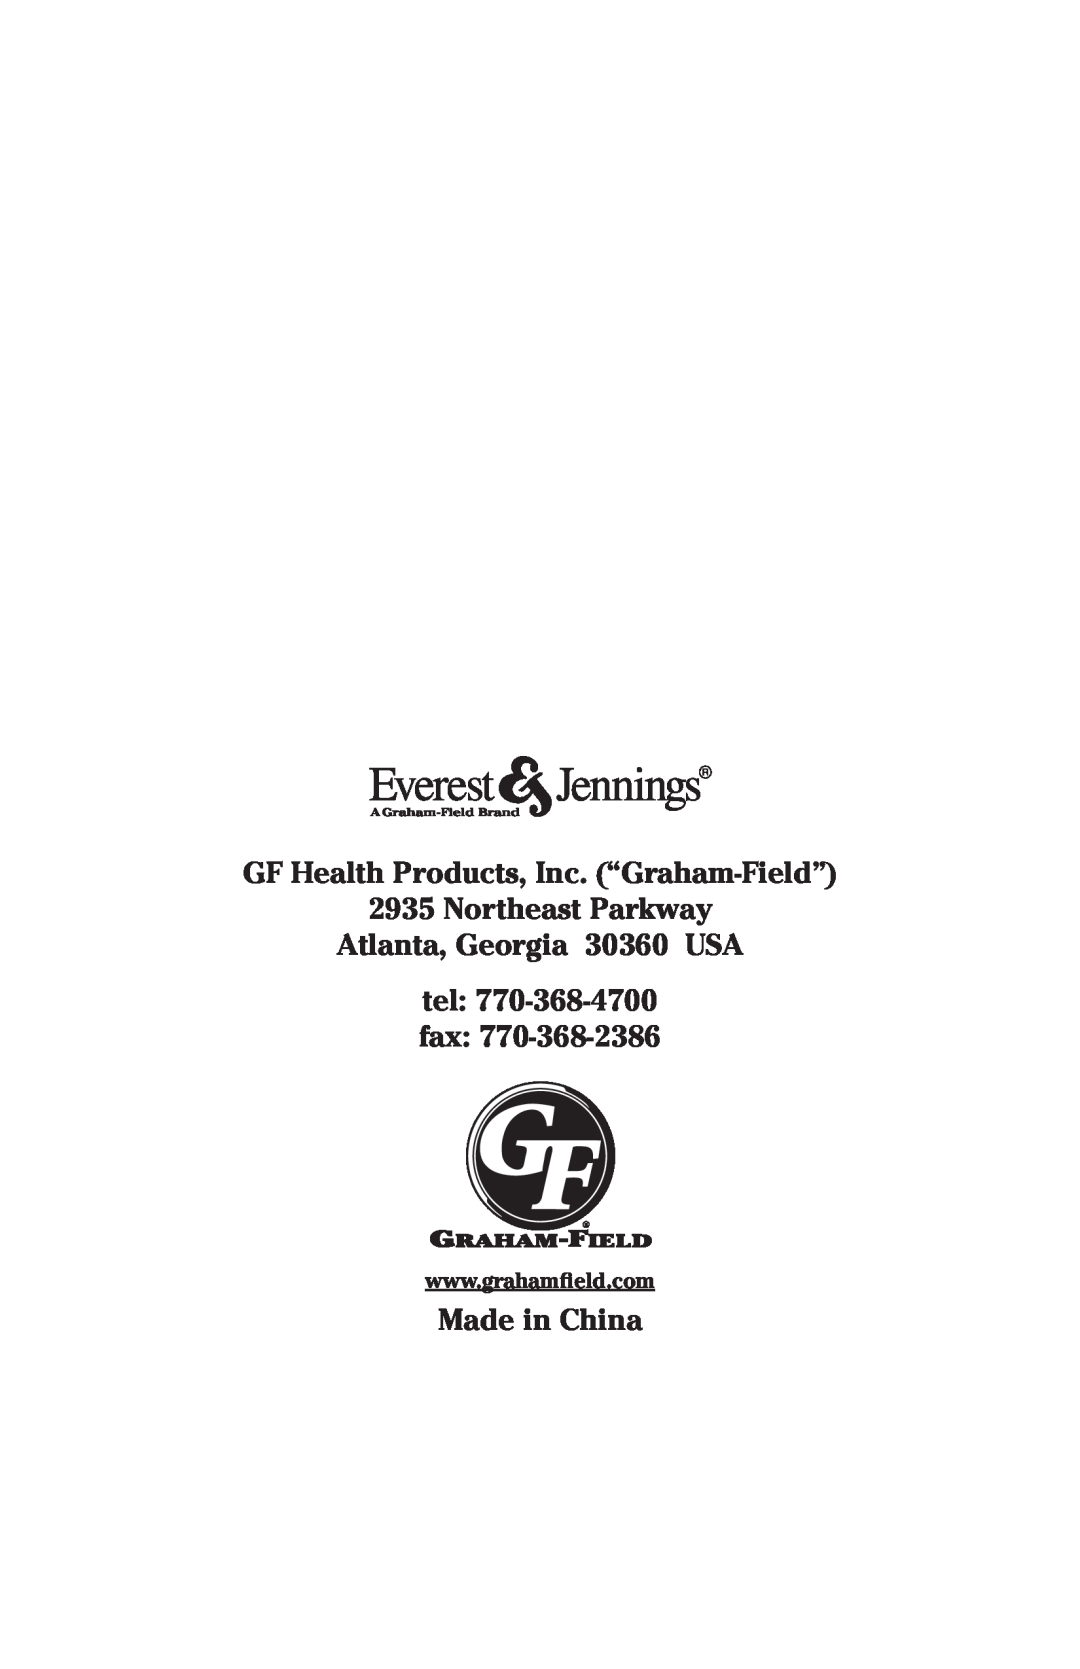 E&J Traveler HTC manual GF Health Products, Inc. “Graham-Field” 2935 Northeast Parkway, Atlanta, Georgia 30360 USA tel fax 